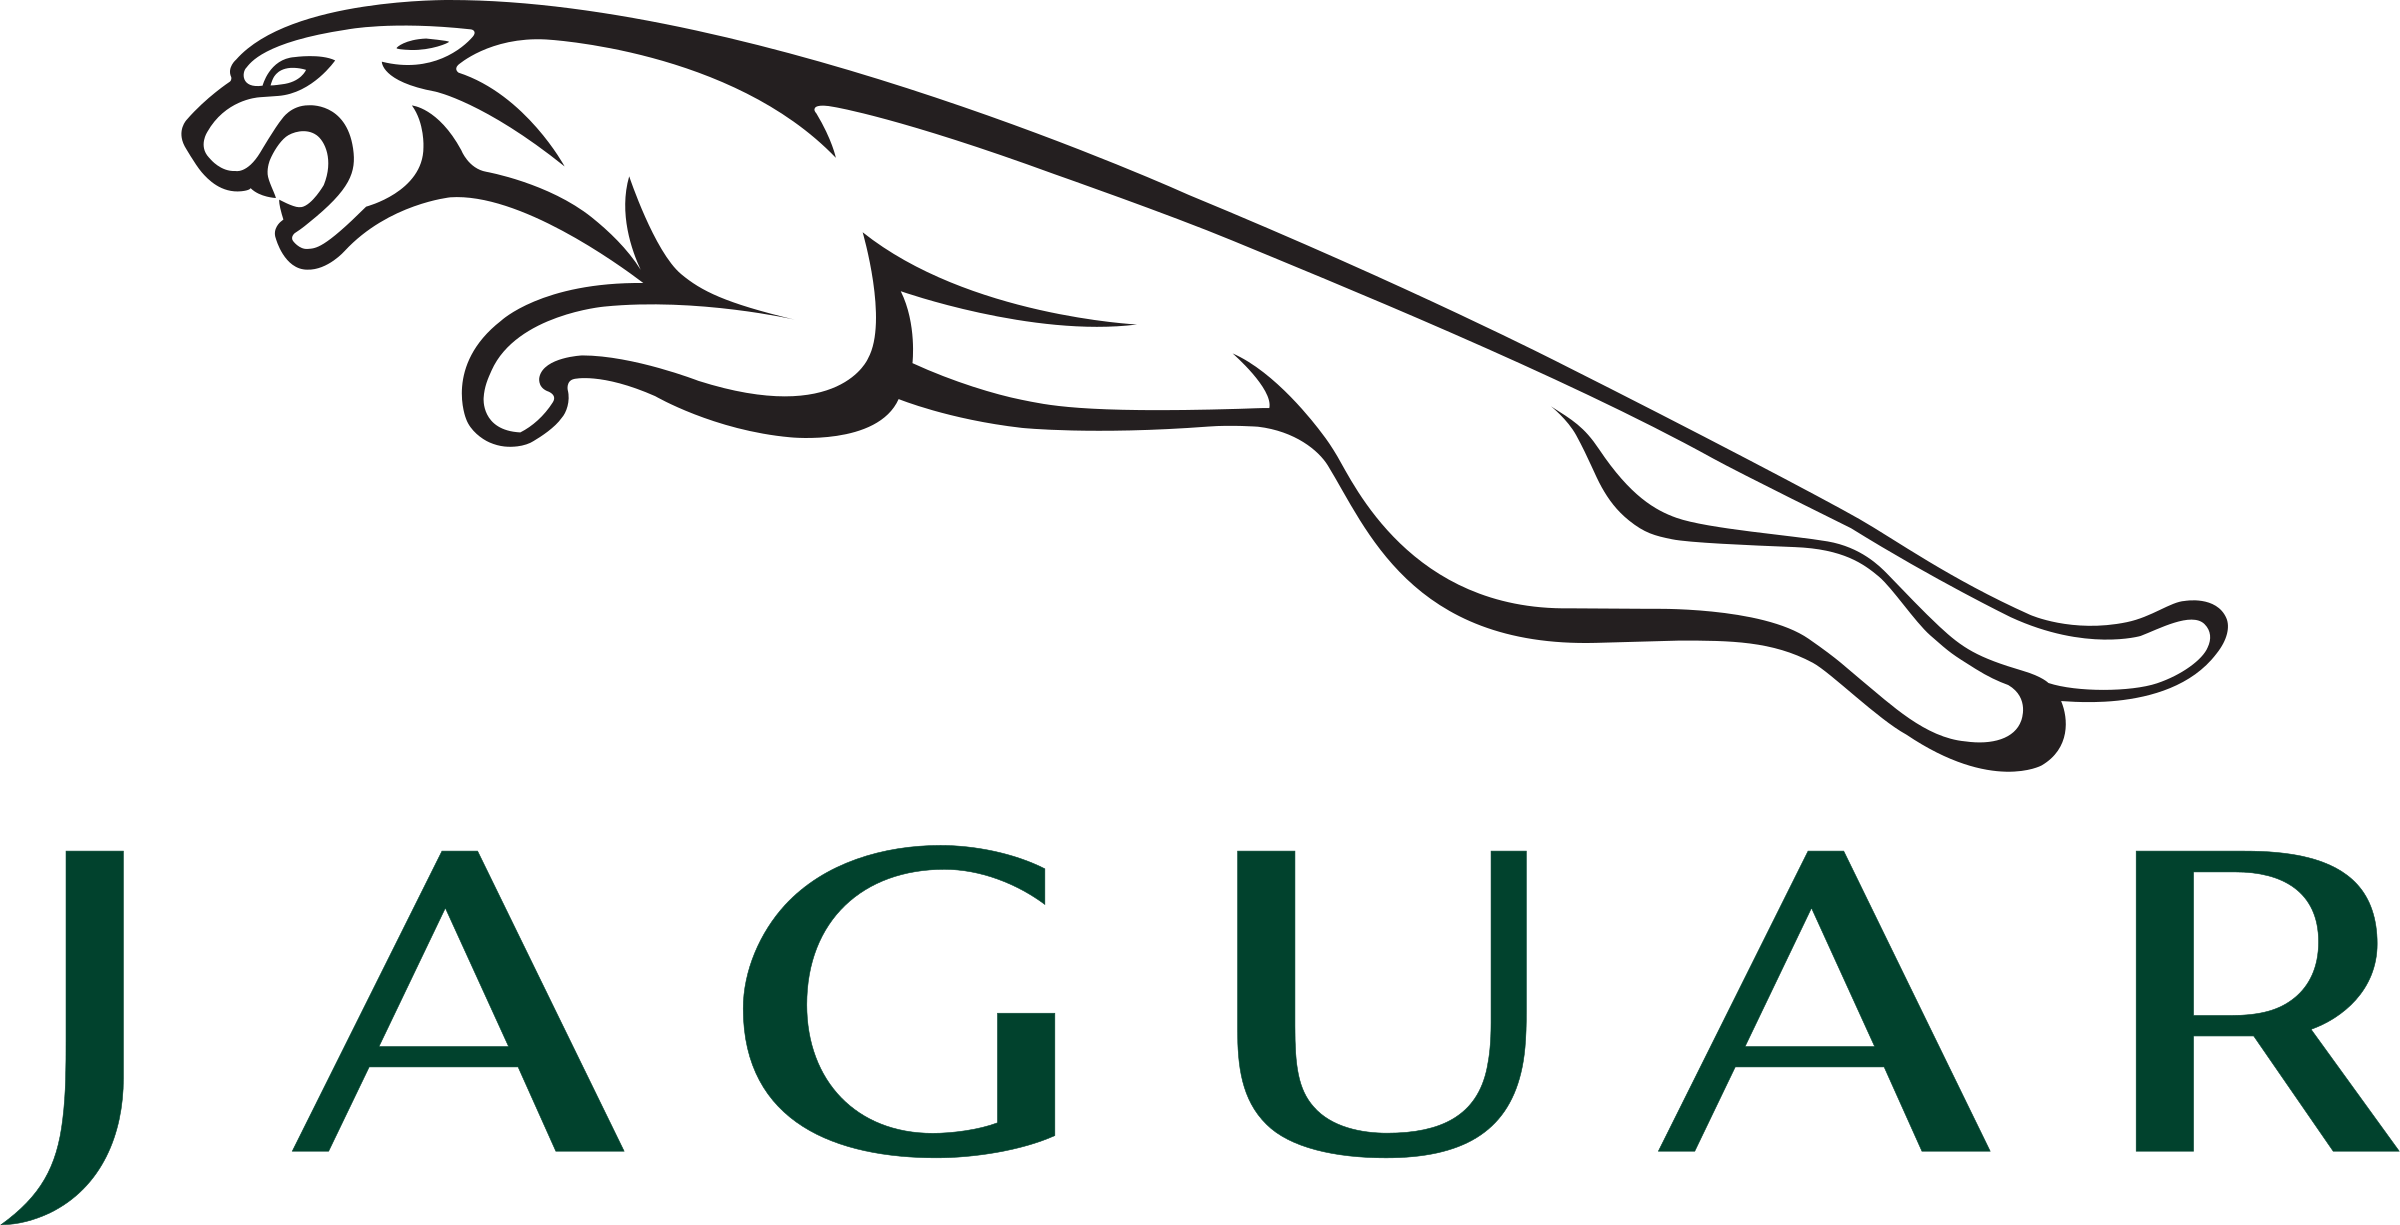 Jaguar Car Logo - Jaguar Cars Logo PNG Transparent & SVG Vector